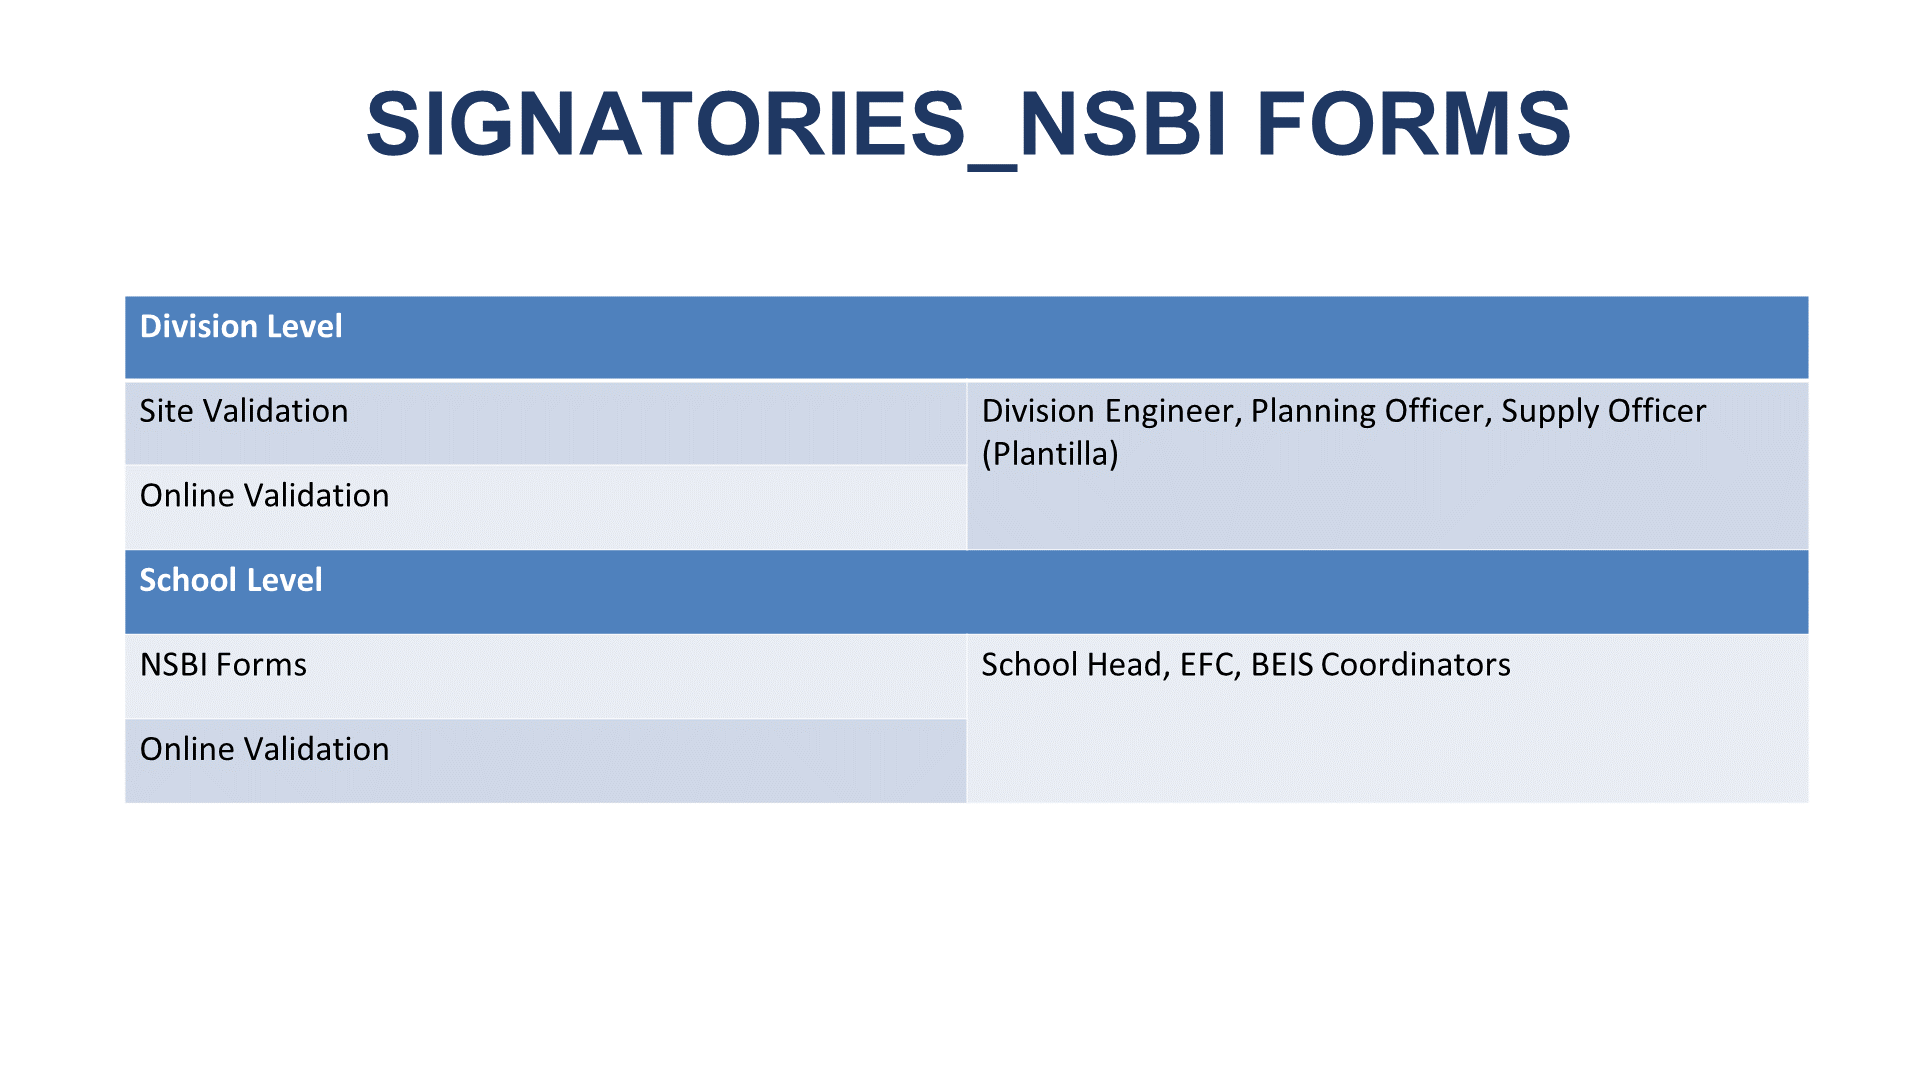 DepEd National School Building Inventory (NSBI)